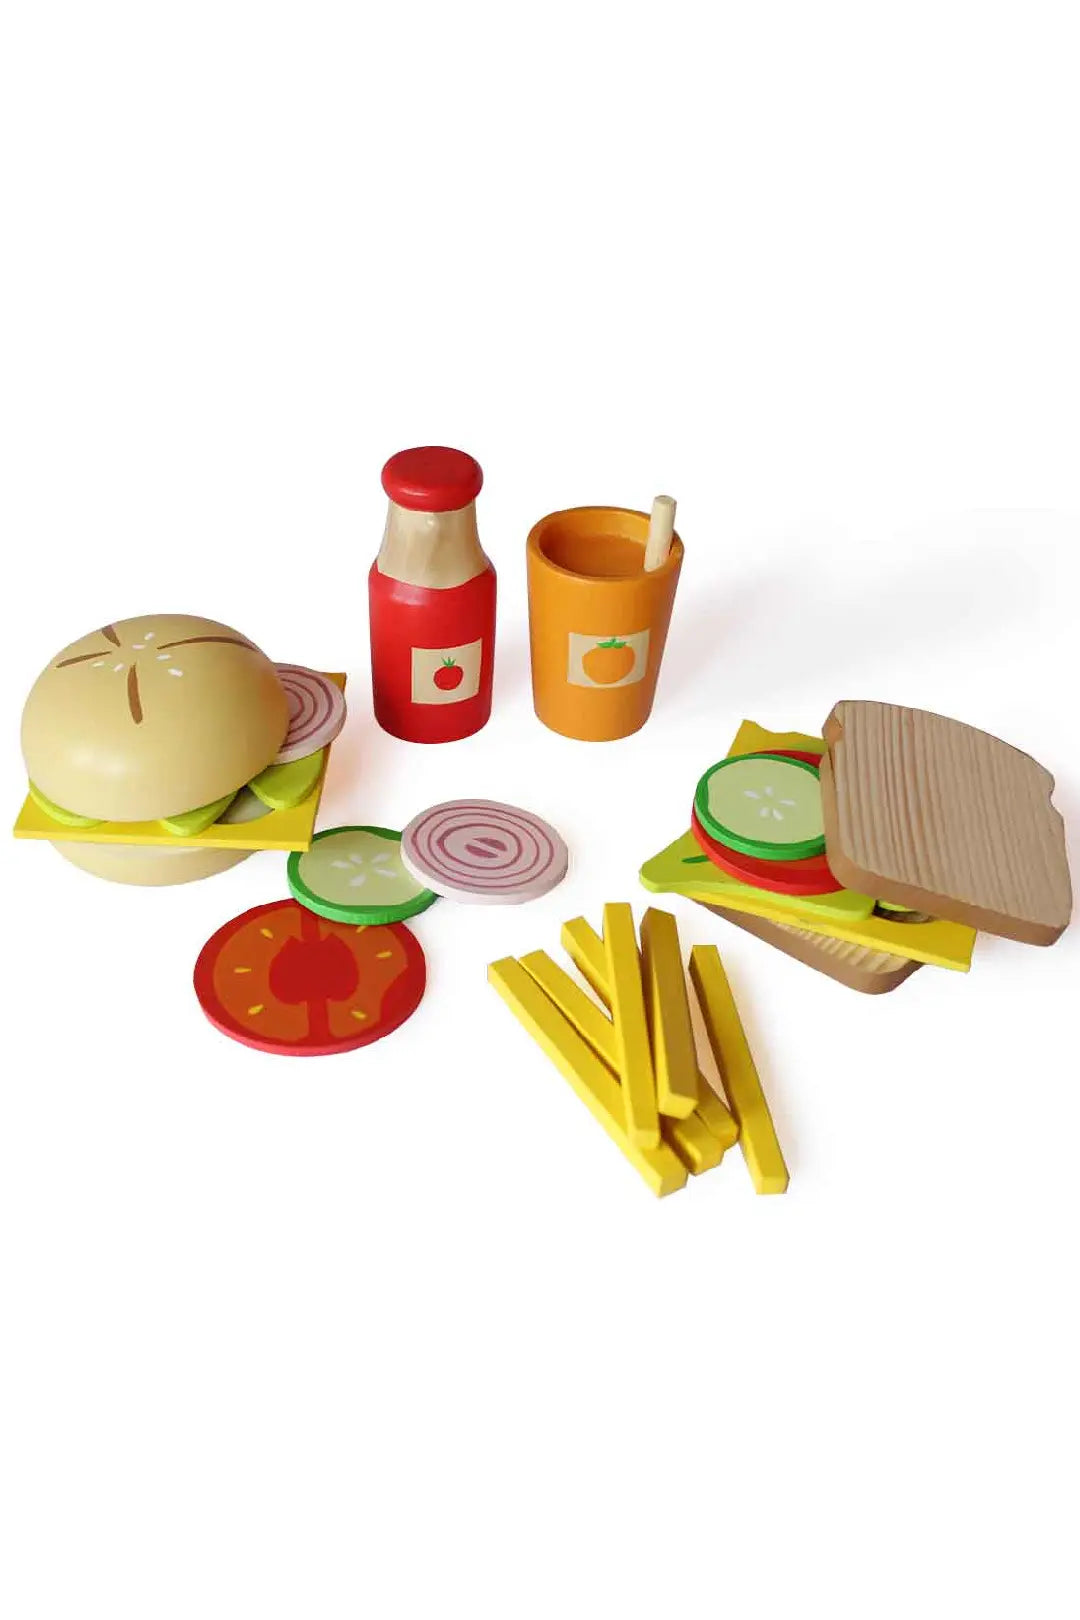 Wooden Sandwich and Burger Set